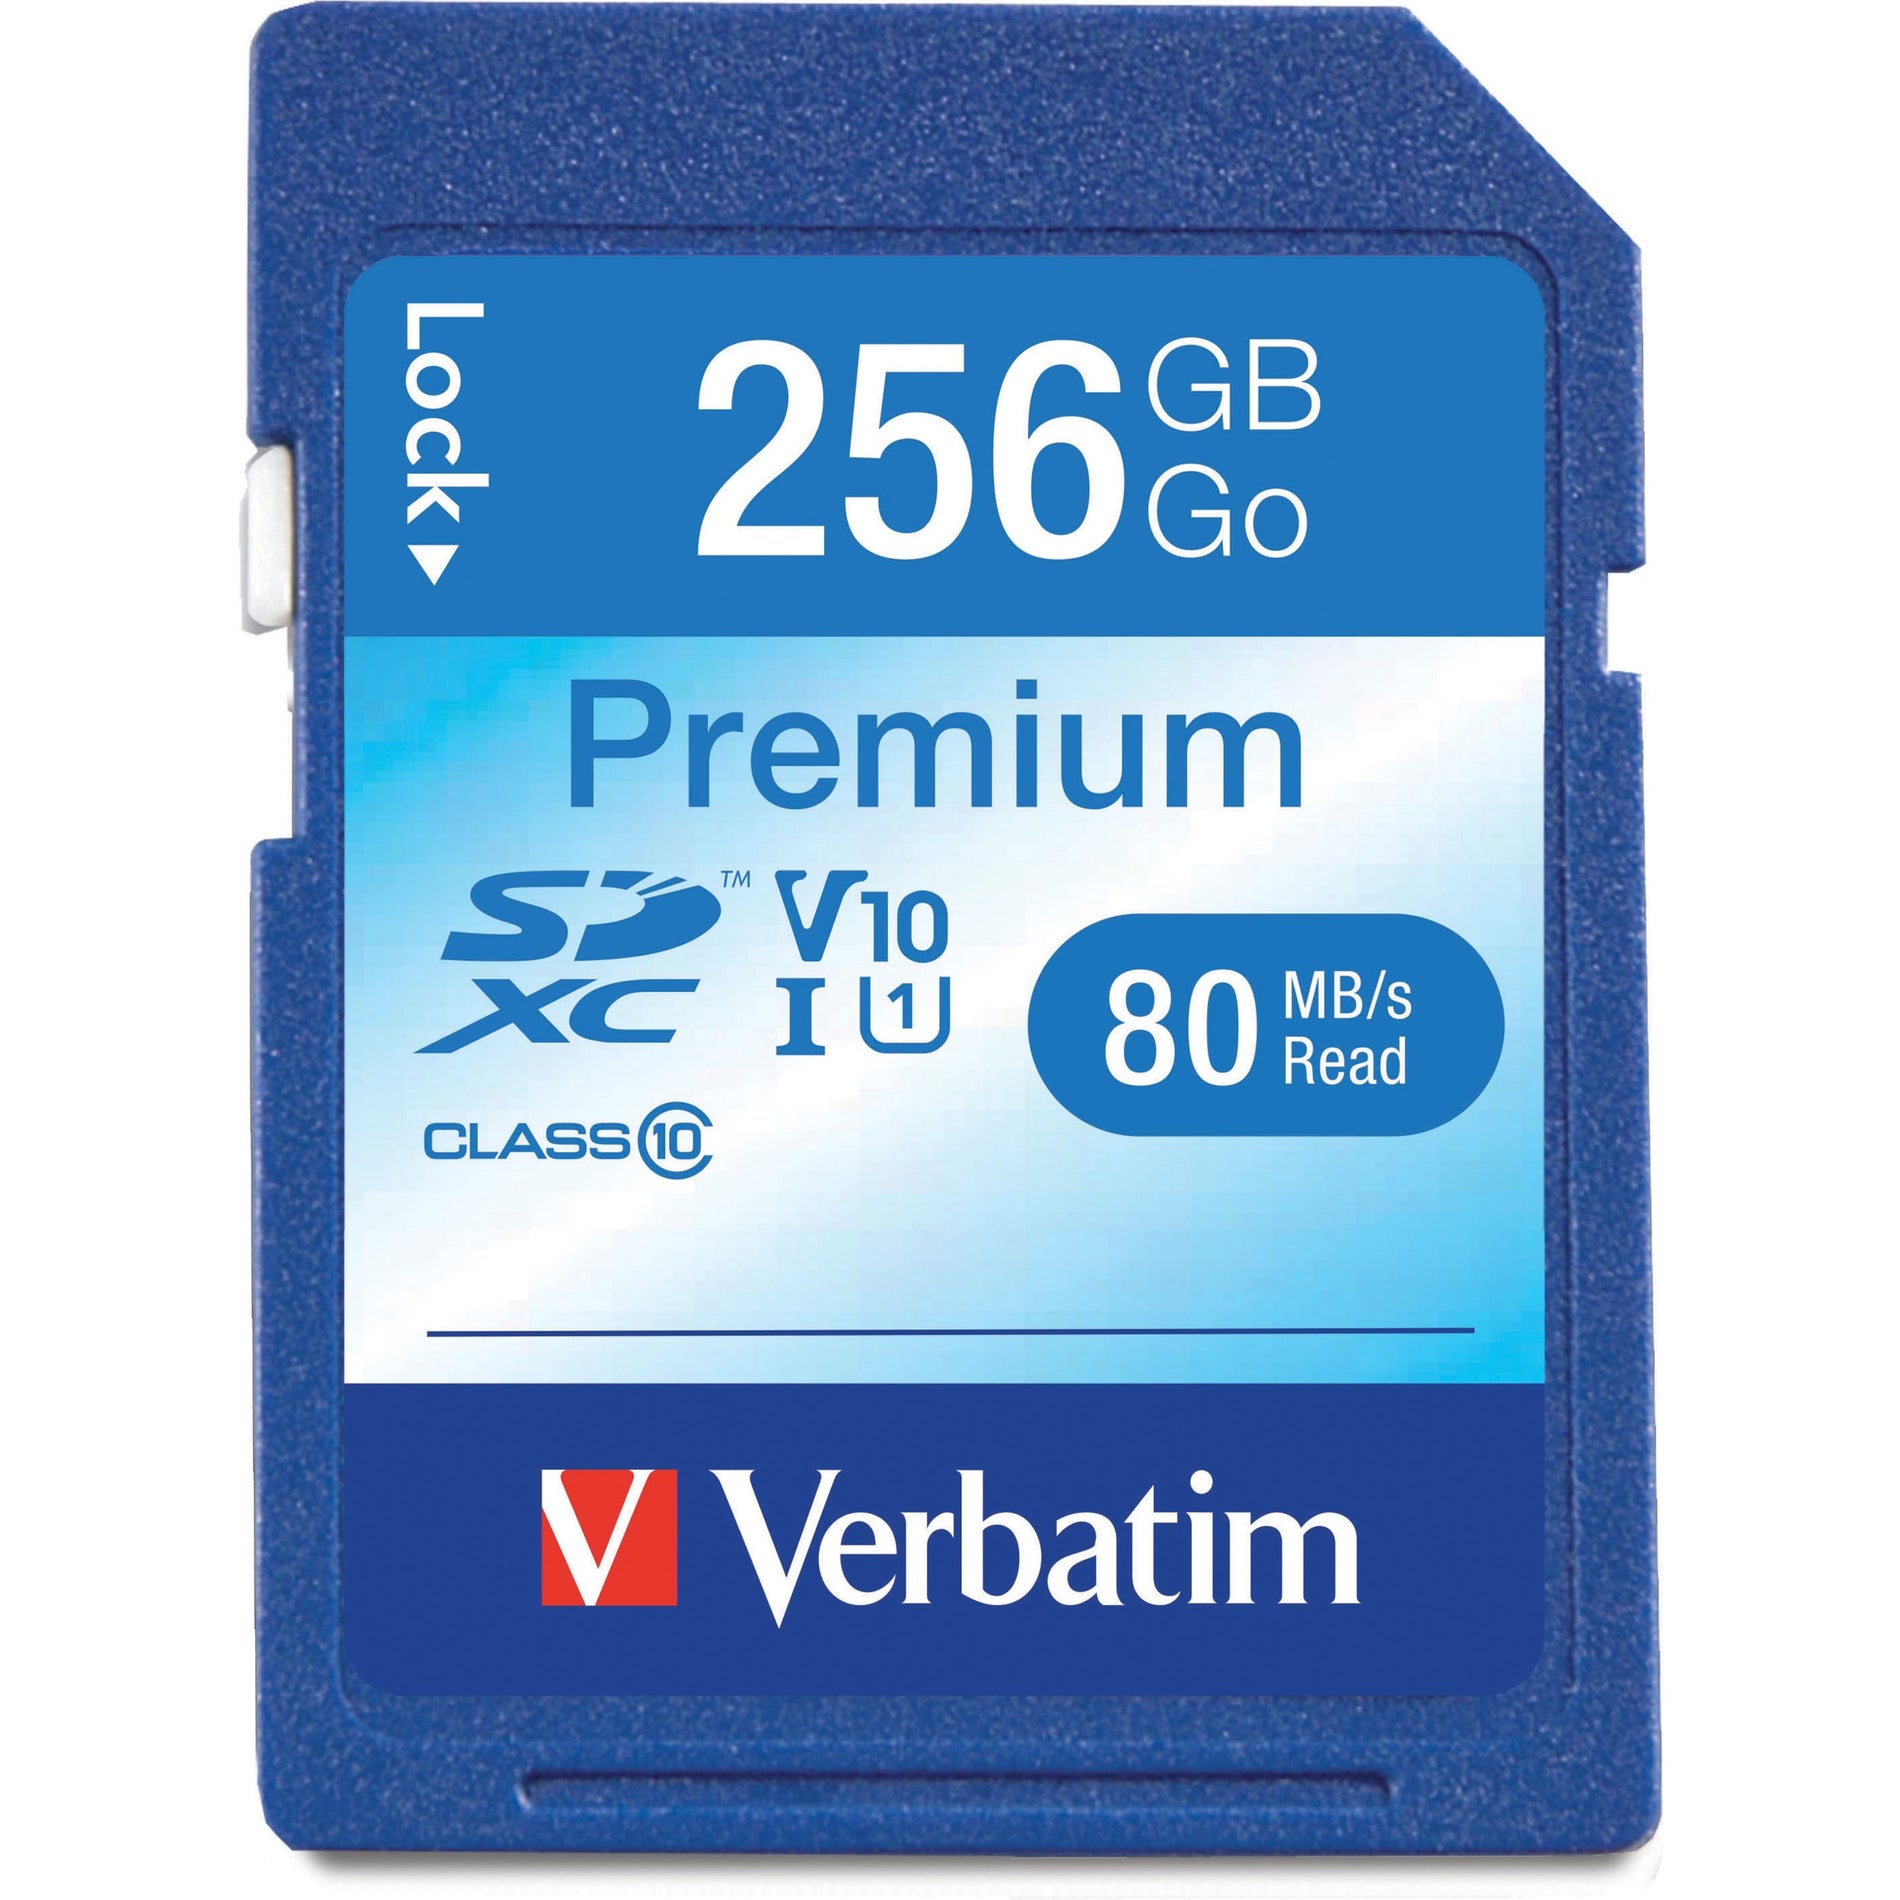 Verbatim 99828 256GB Premium SDXC Memory Card, UHS-I V10 U1 Class 10, 90MB/s Read Speed